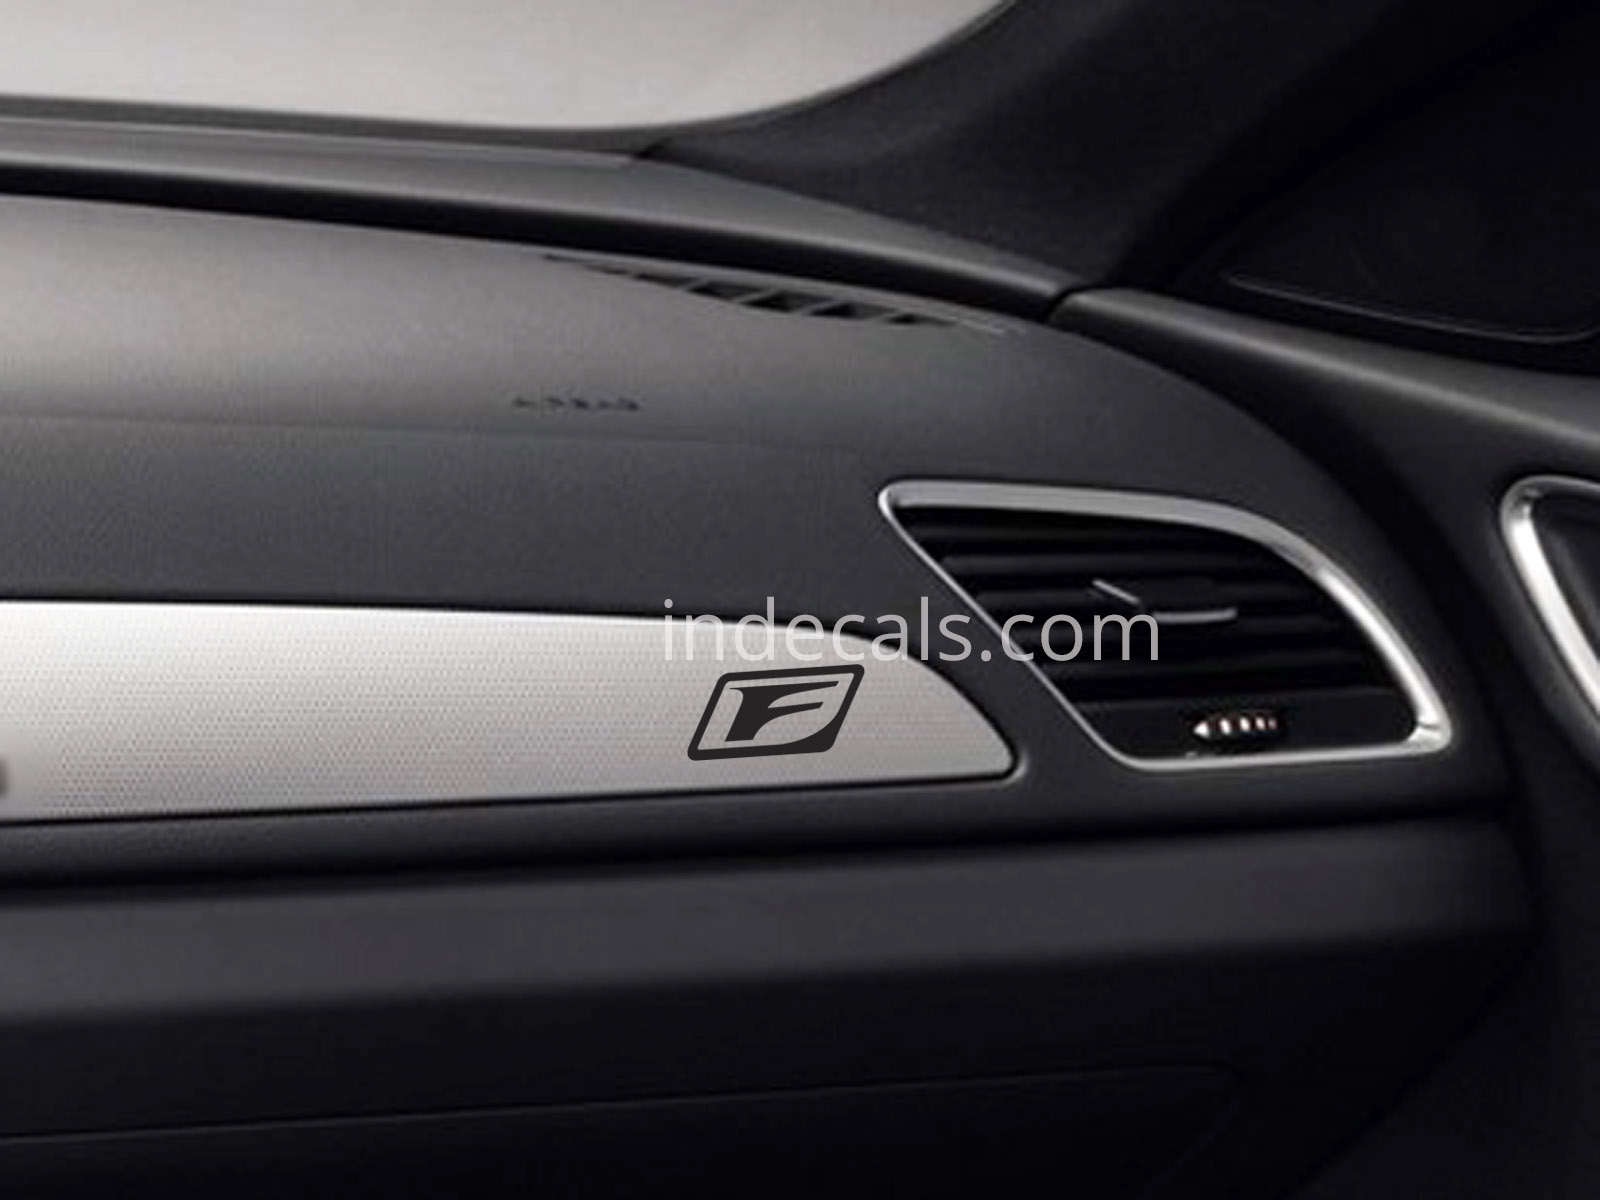 3 x Lexus F-sport Stickers for Dash Trim - Black